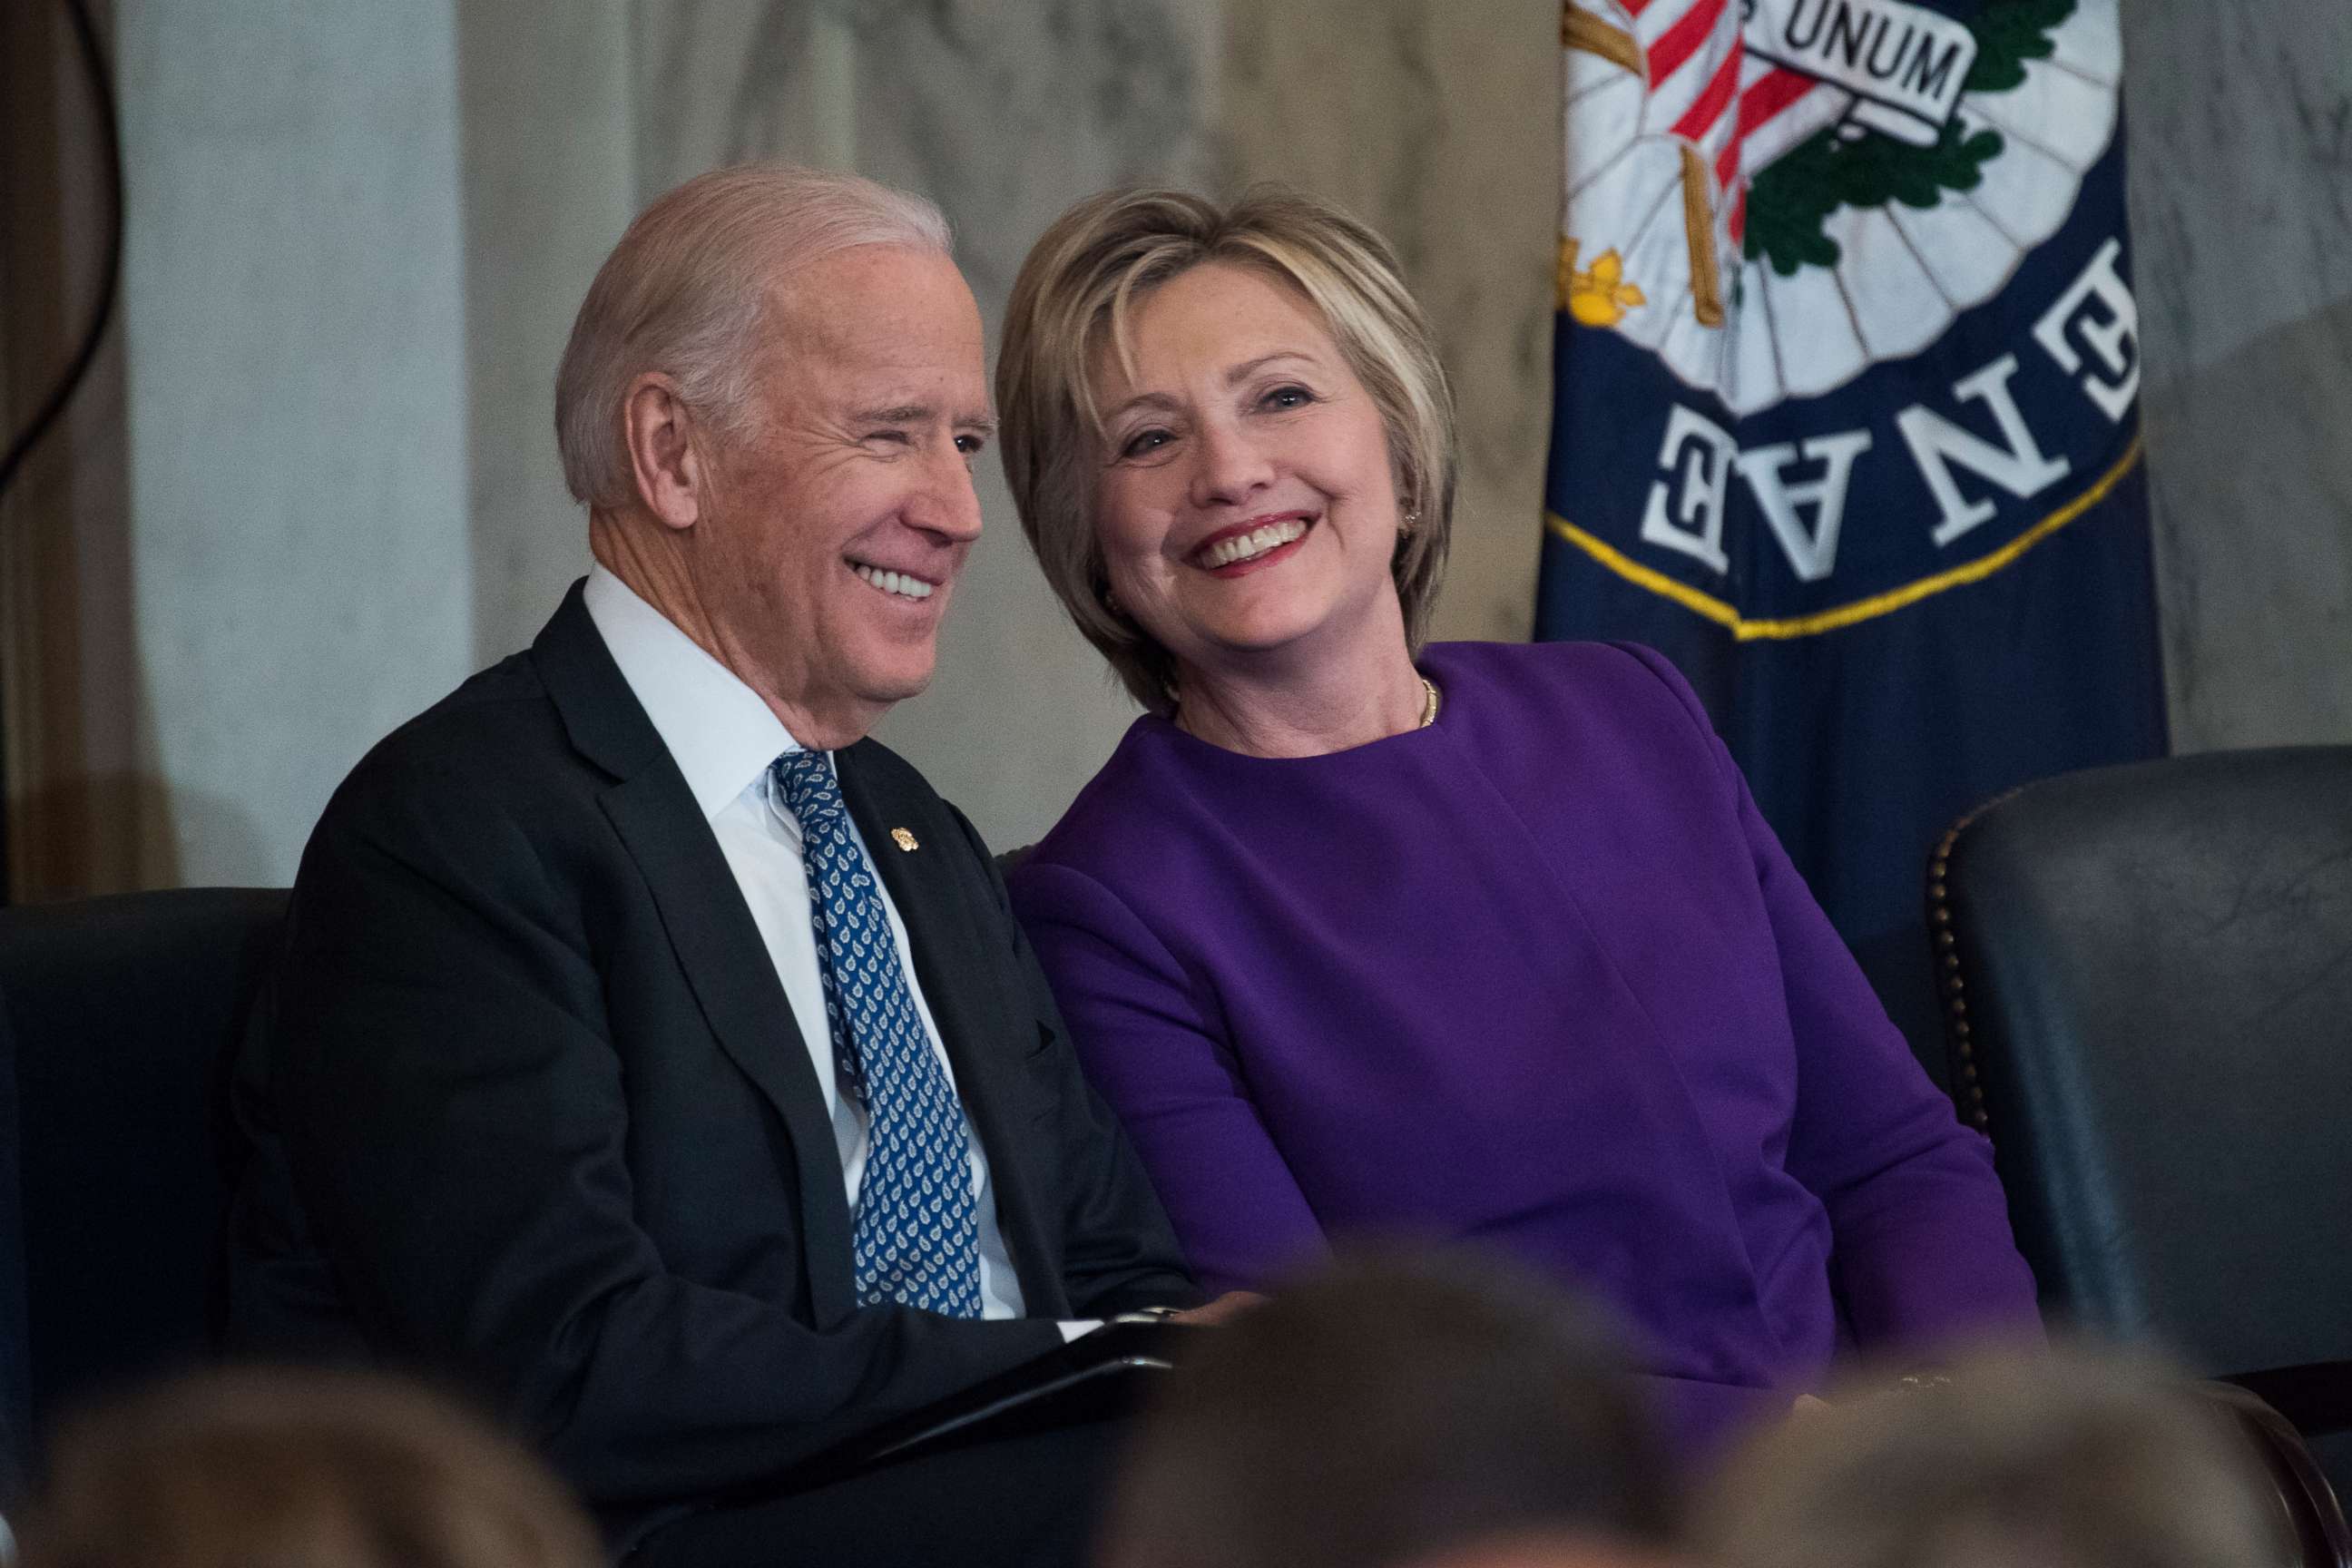 PHOTO: Former Vice President Joe Biden and former Secretary of State Hillary Clinton attend an event, De. 8, 2016 in Washington.